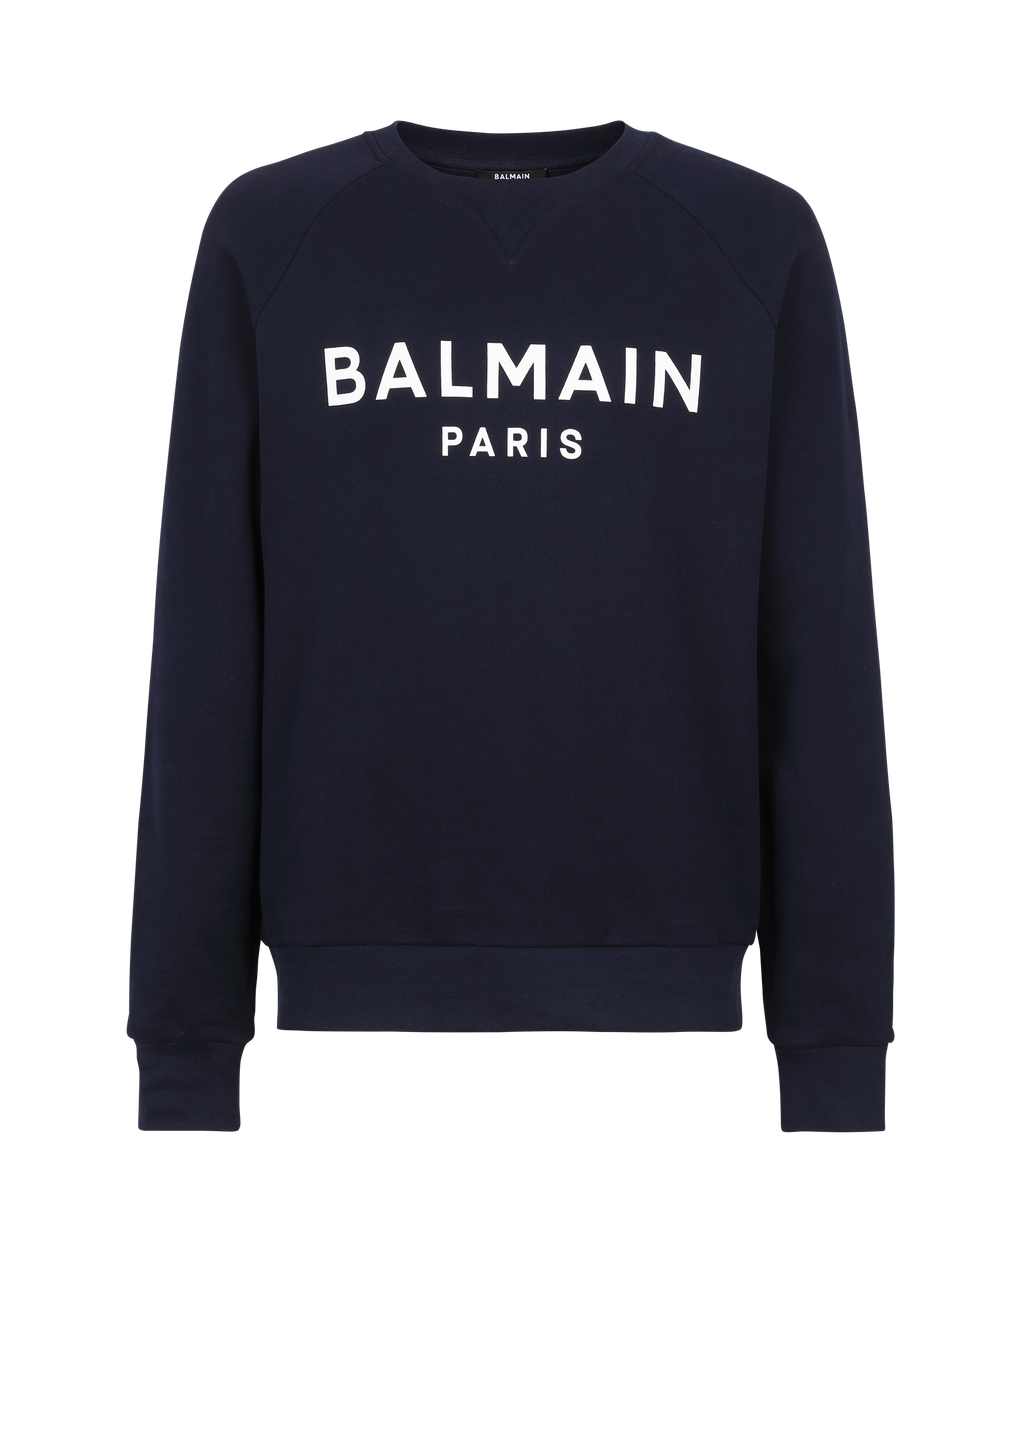 Sweat en coton floqué logo Balmain Paris, bleu marine, hi-res